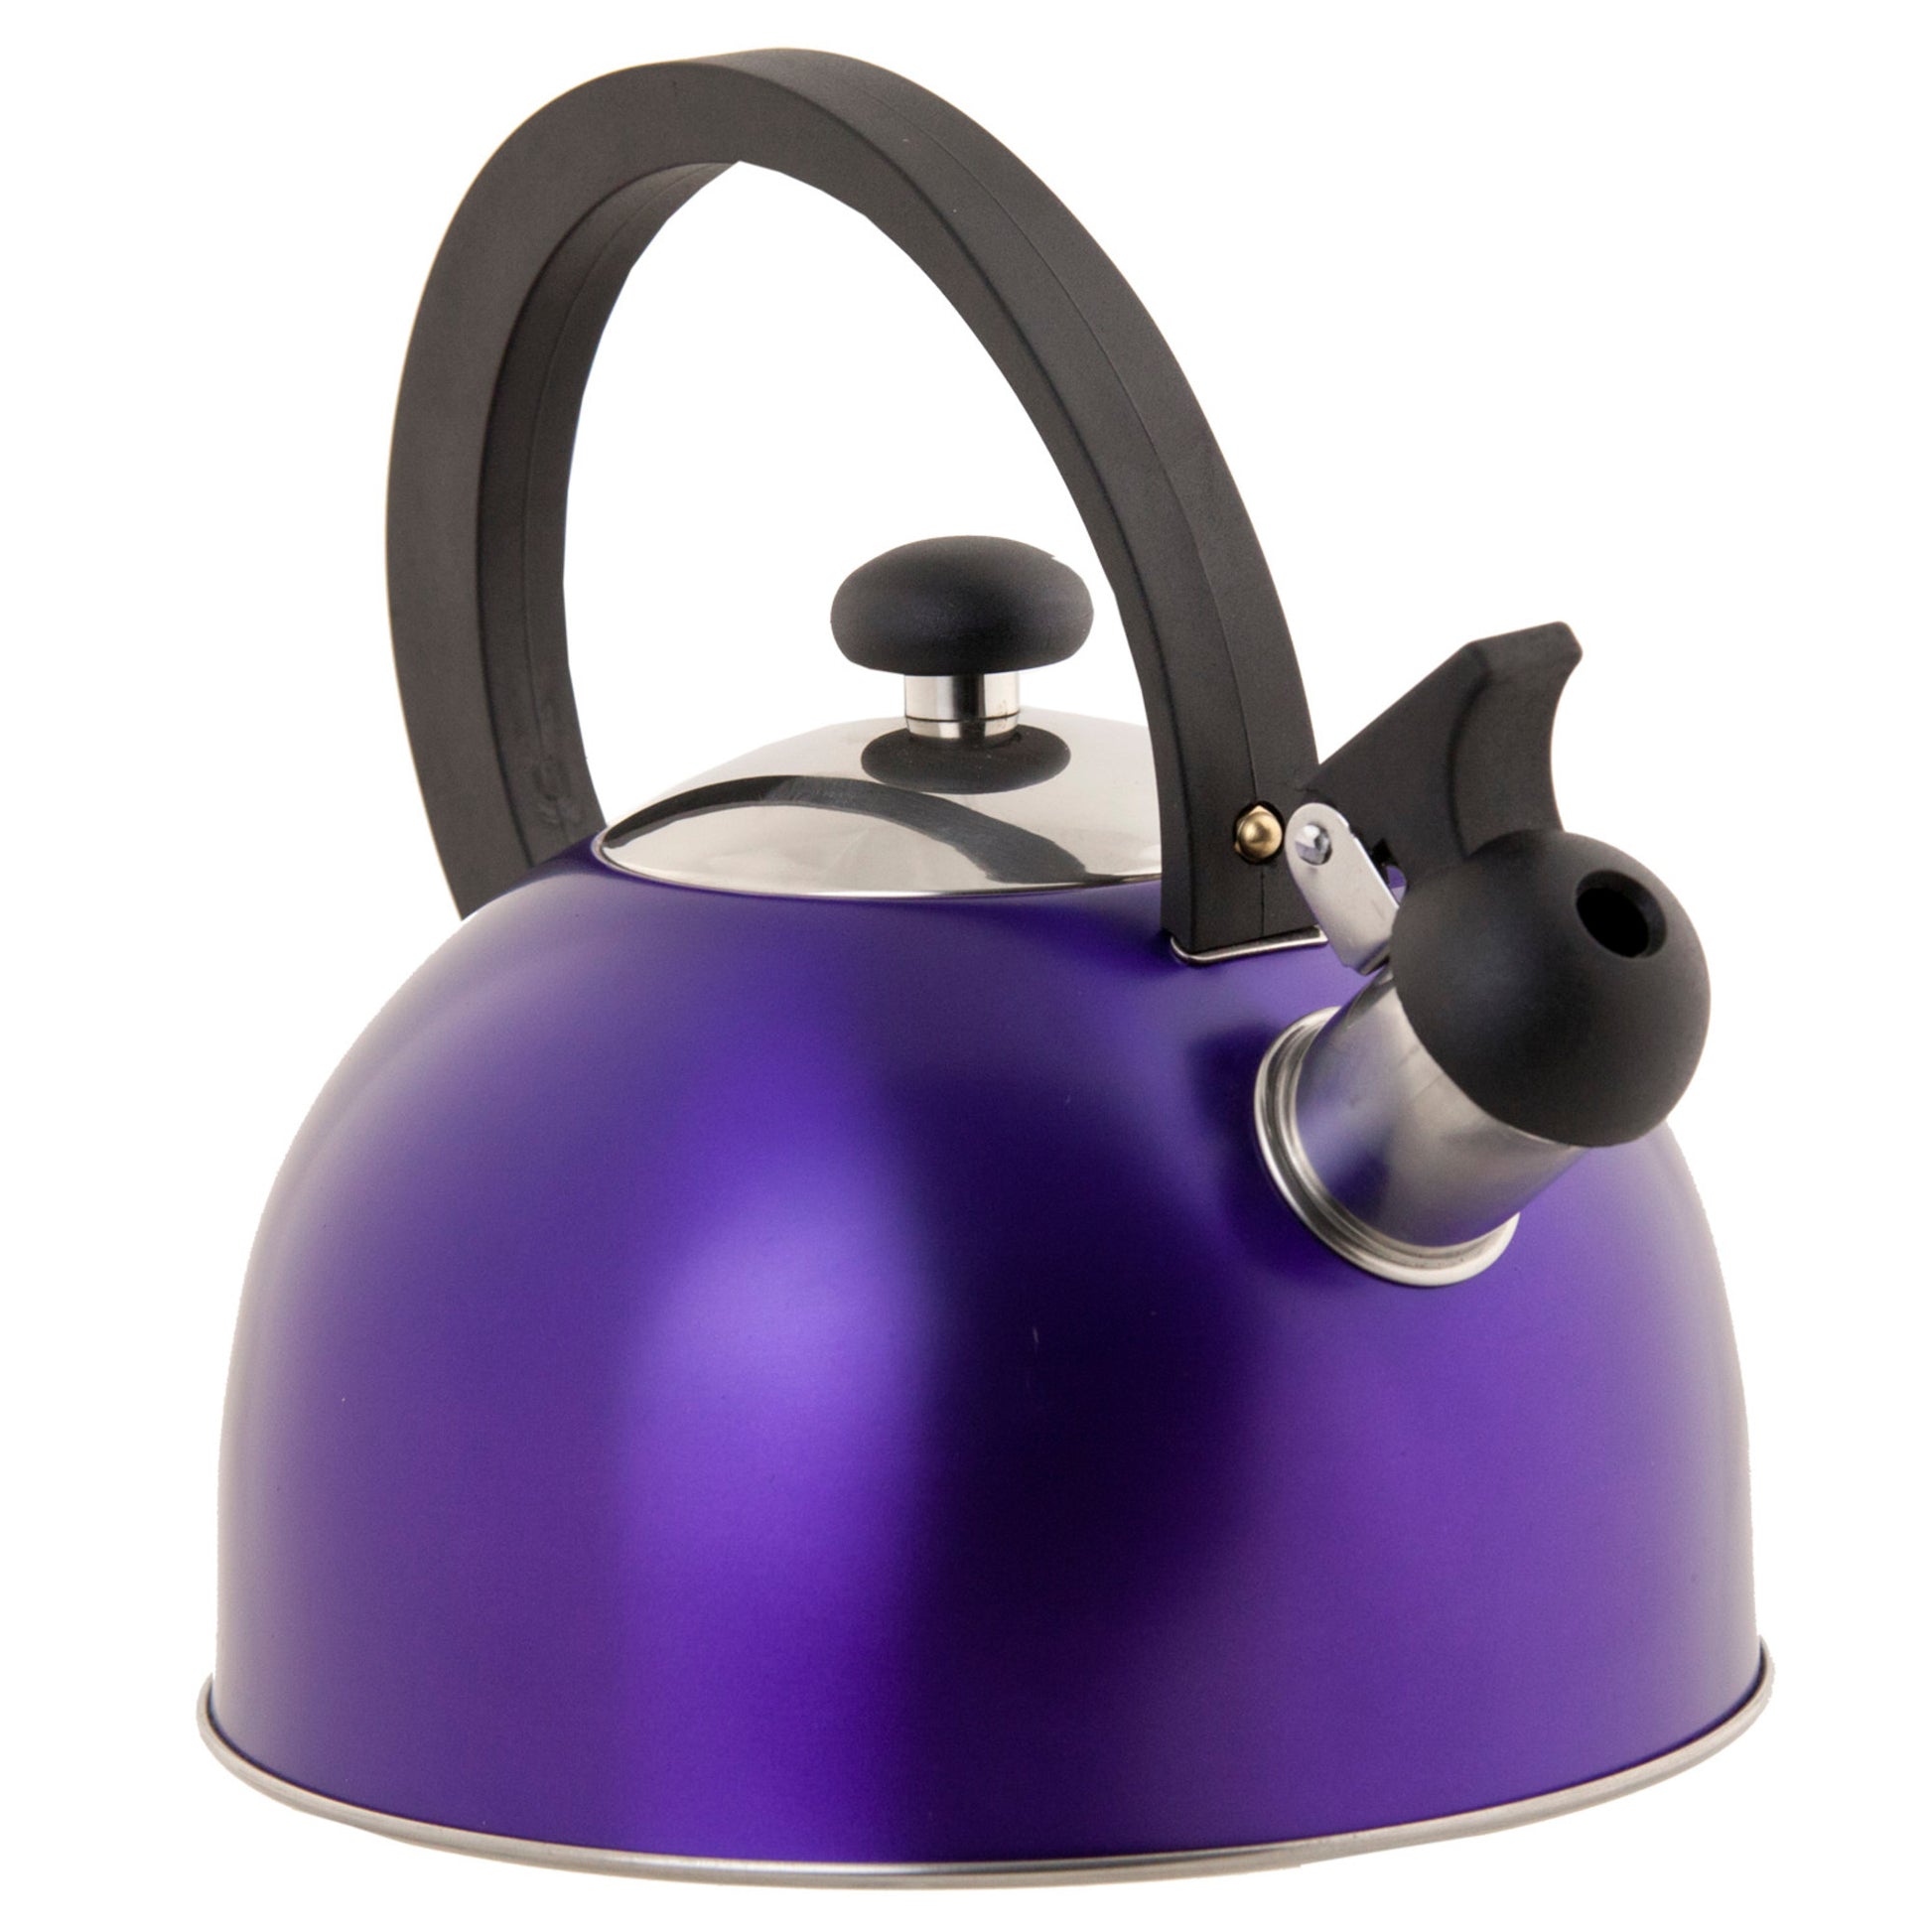 Home Basics 85 oz. Stainless Steel Whistling Tea Kettle - Purple